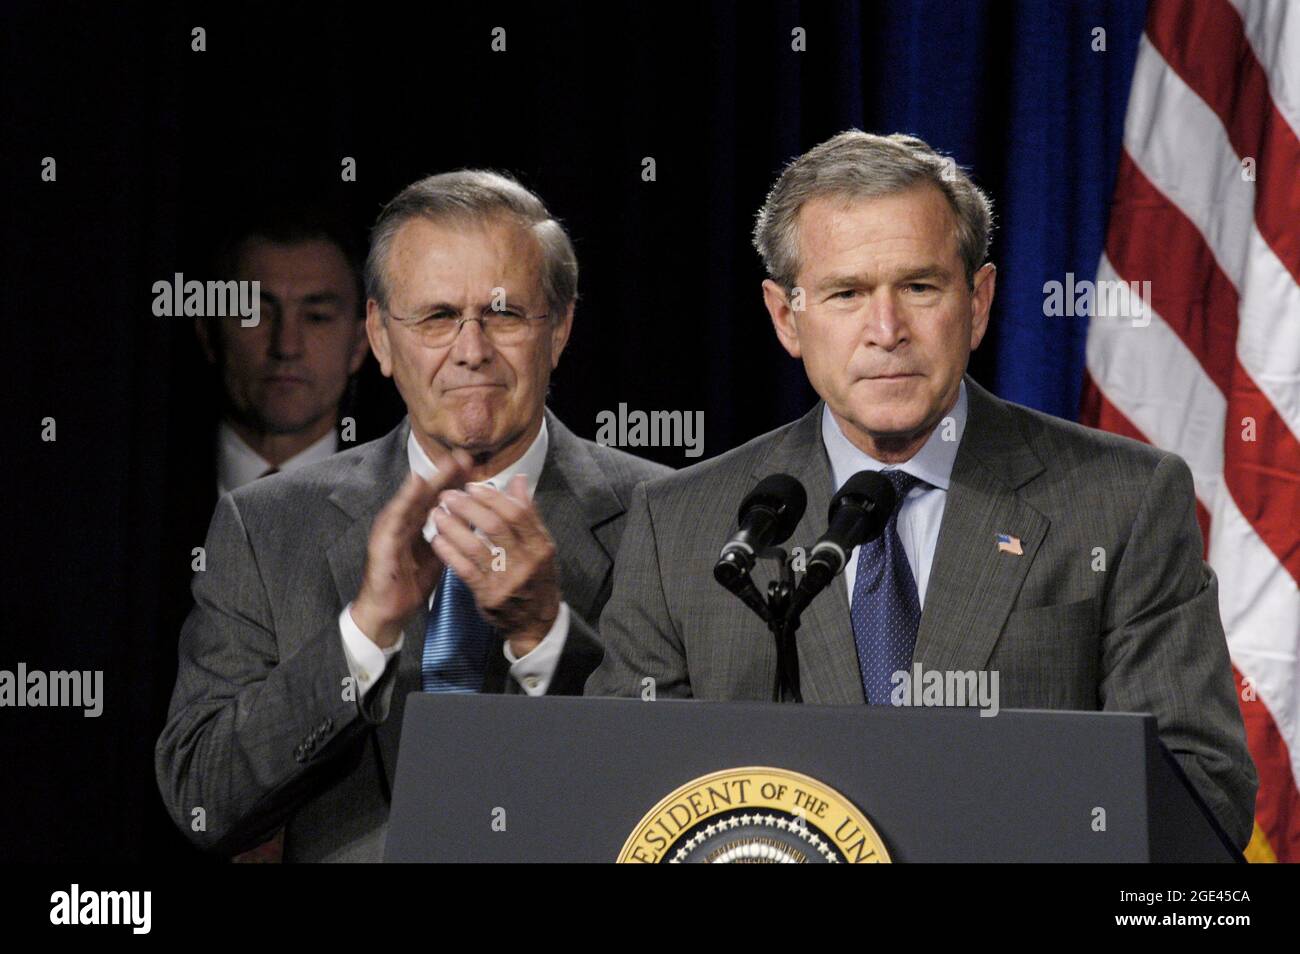 WASHINGTON DC, USA - 24 November 2003 - US Secretary of Defense Donald H Rumsfeld applauds President George W Bush during his remarks at the Pentagon. Stock Photo